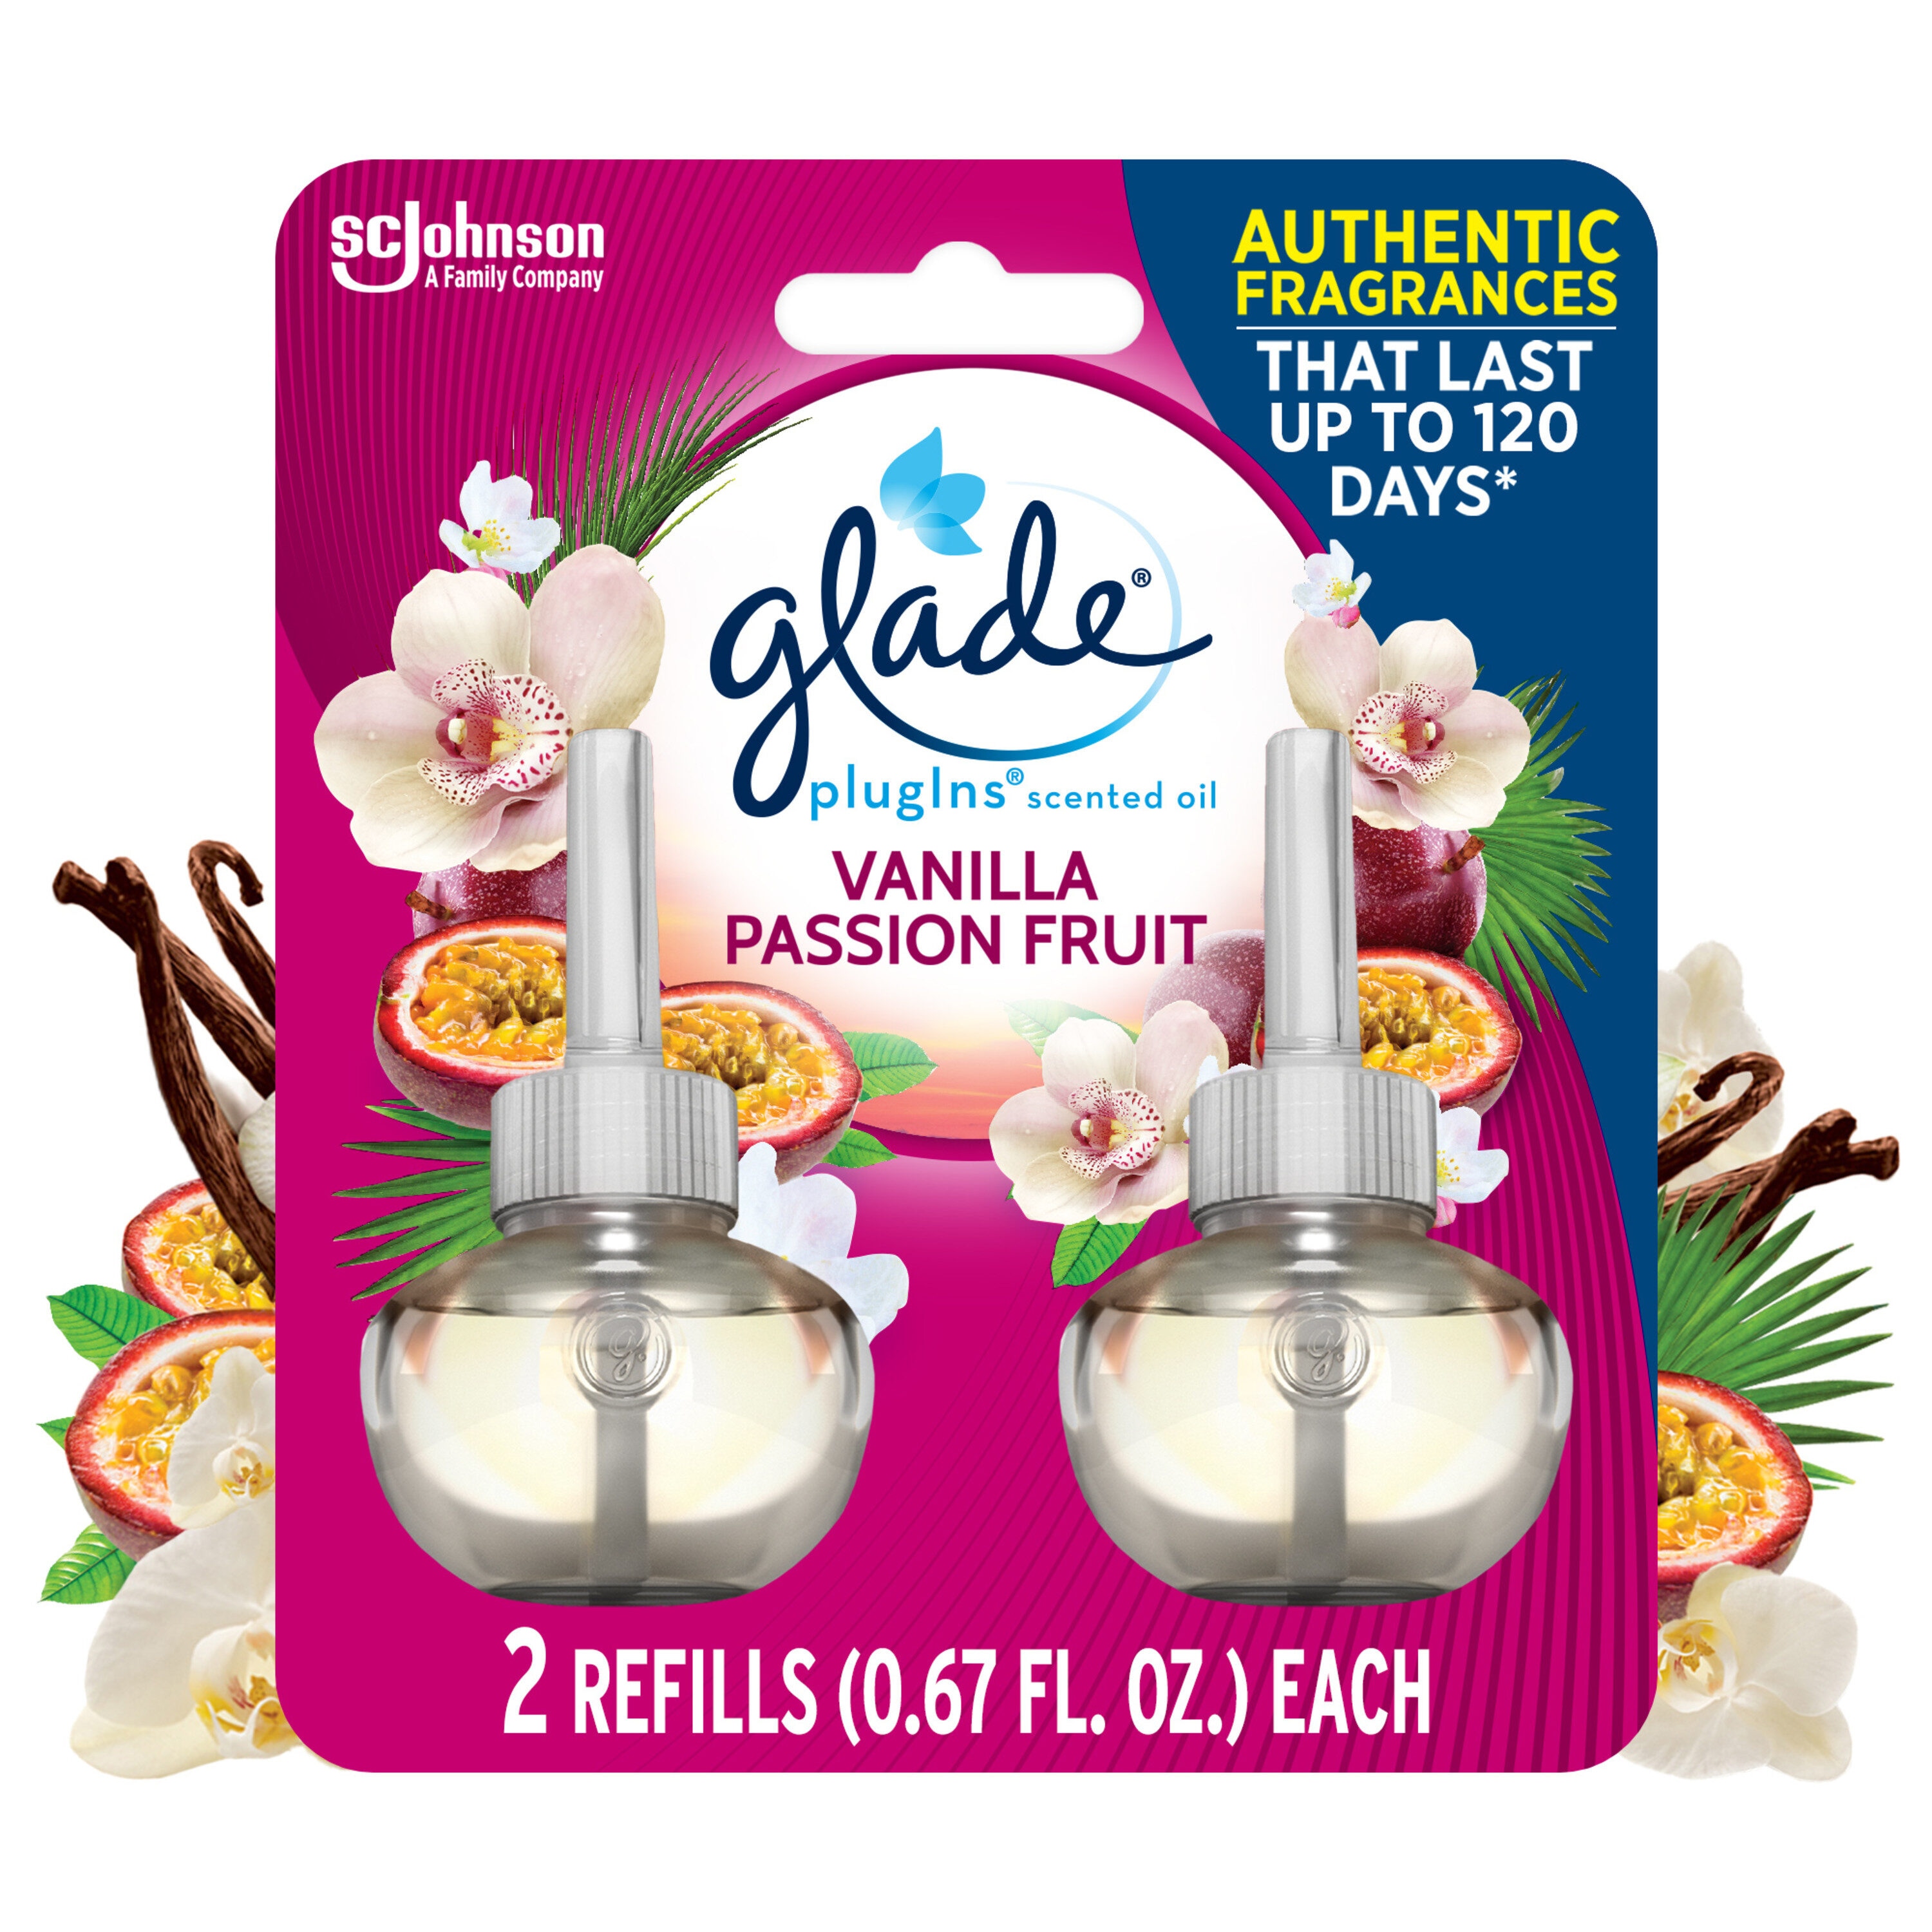 Glade Passion Fruit Vanilla Wax Melts